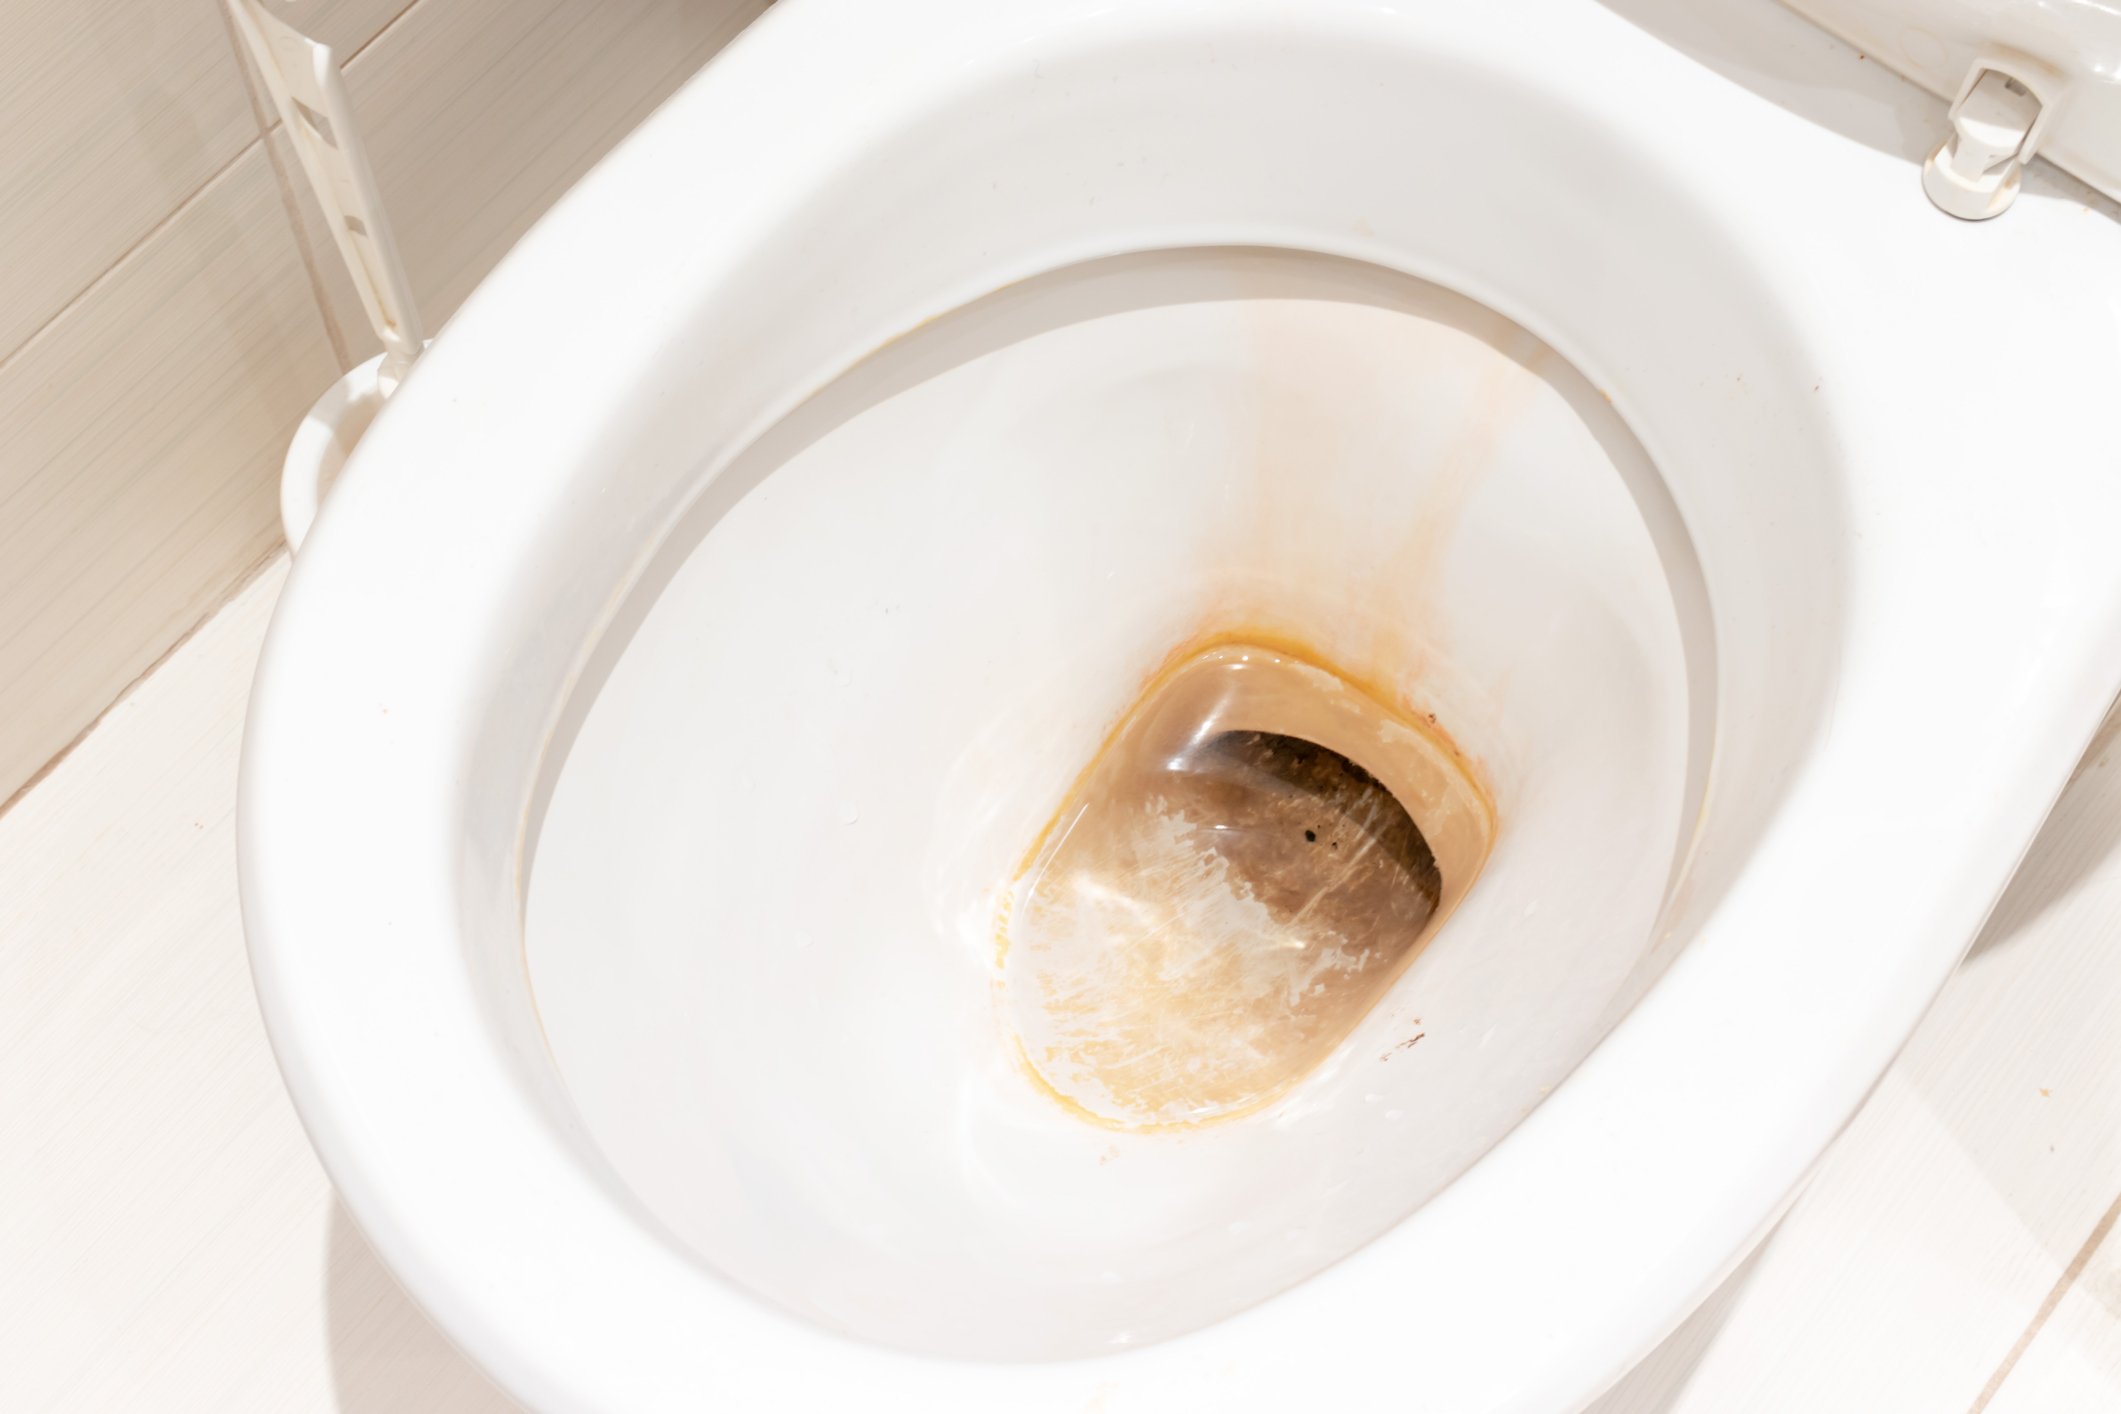 Flushing the Toilet Might Spread Coronavirus | BlackDoctor.org - Where